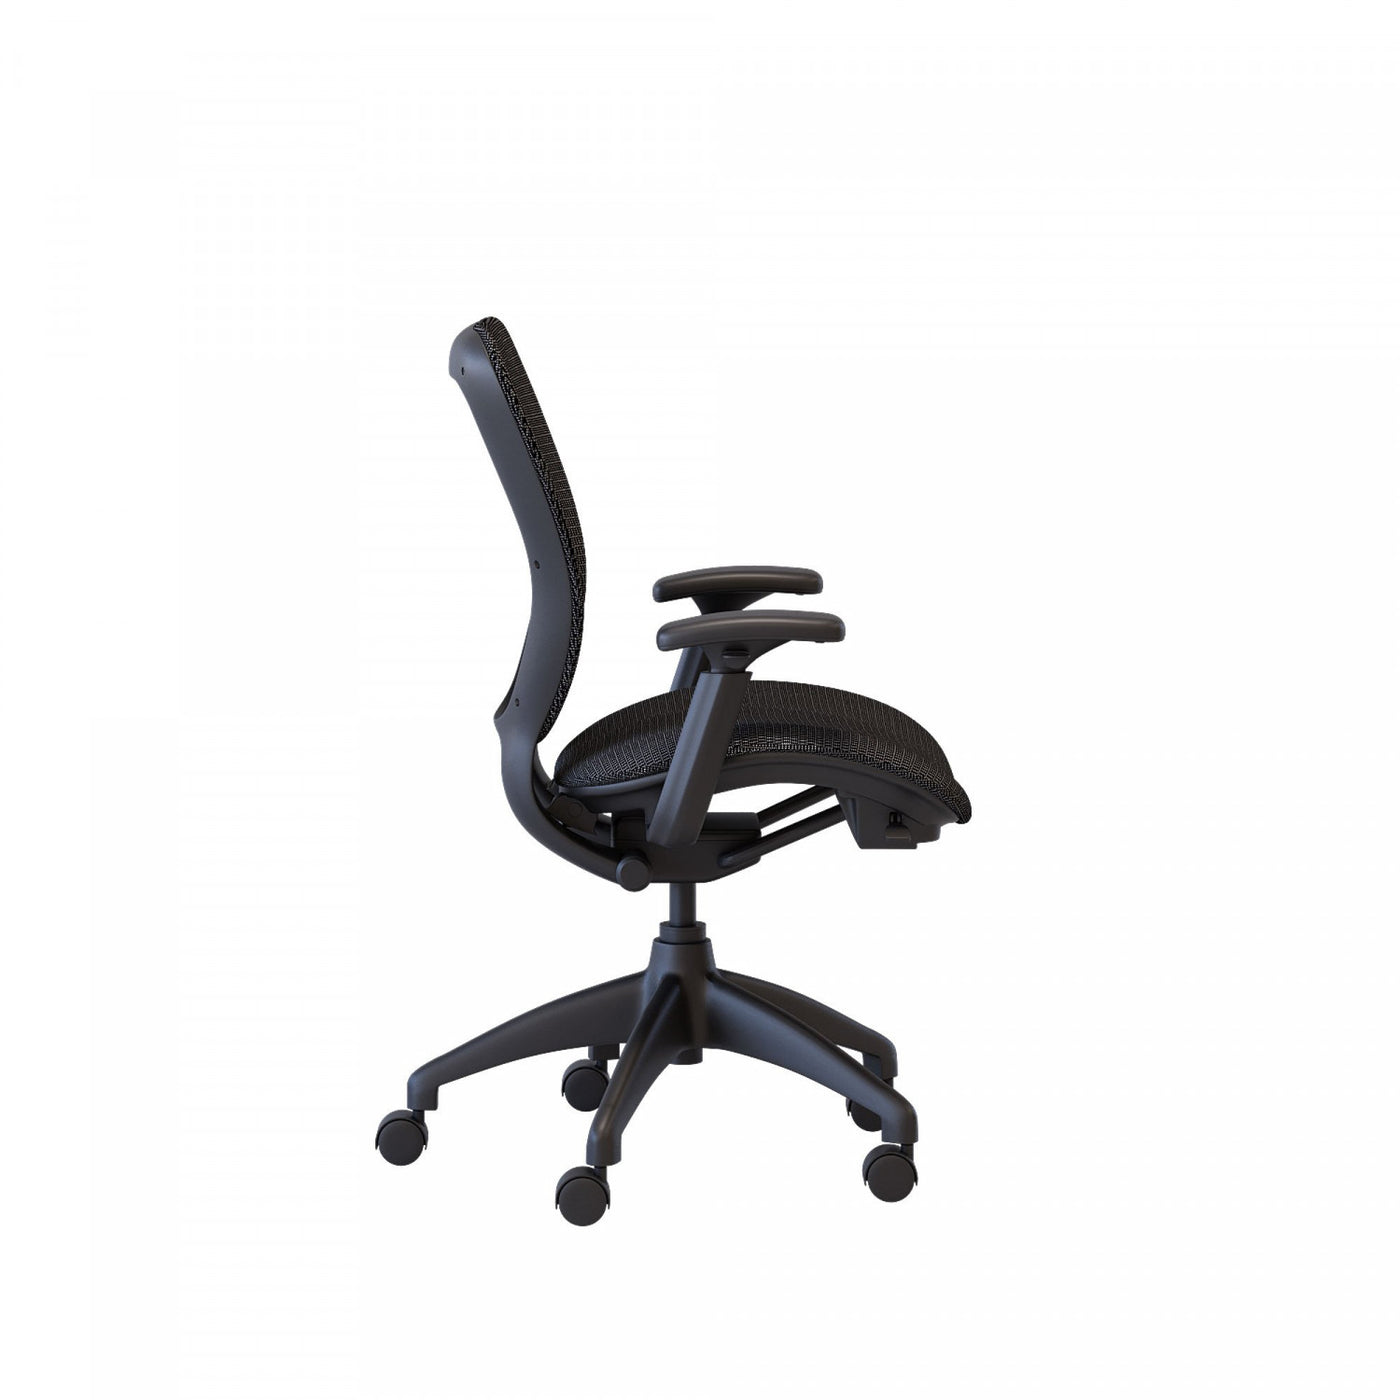 Liam Office Chair - Black